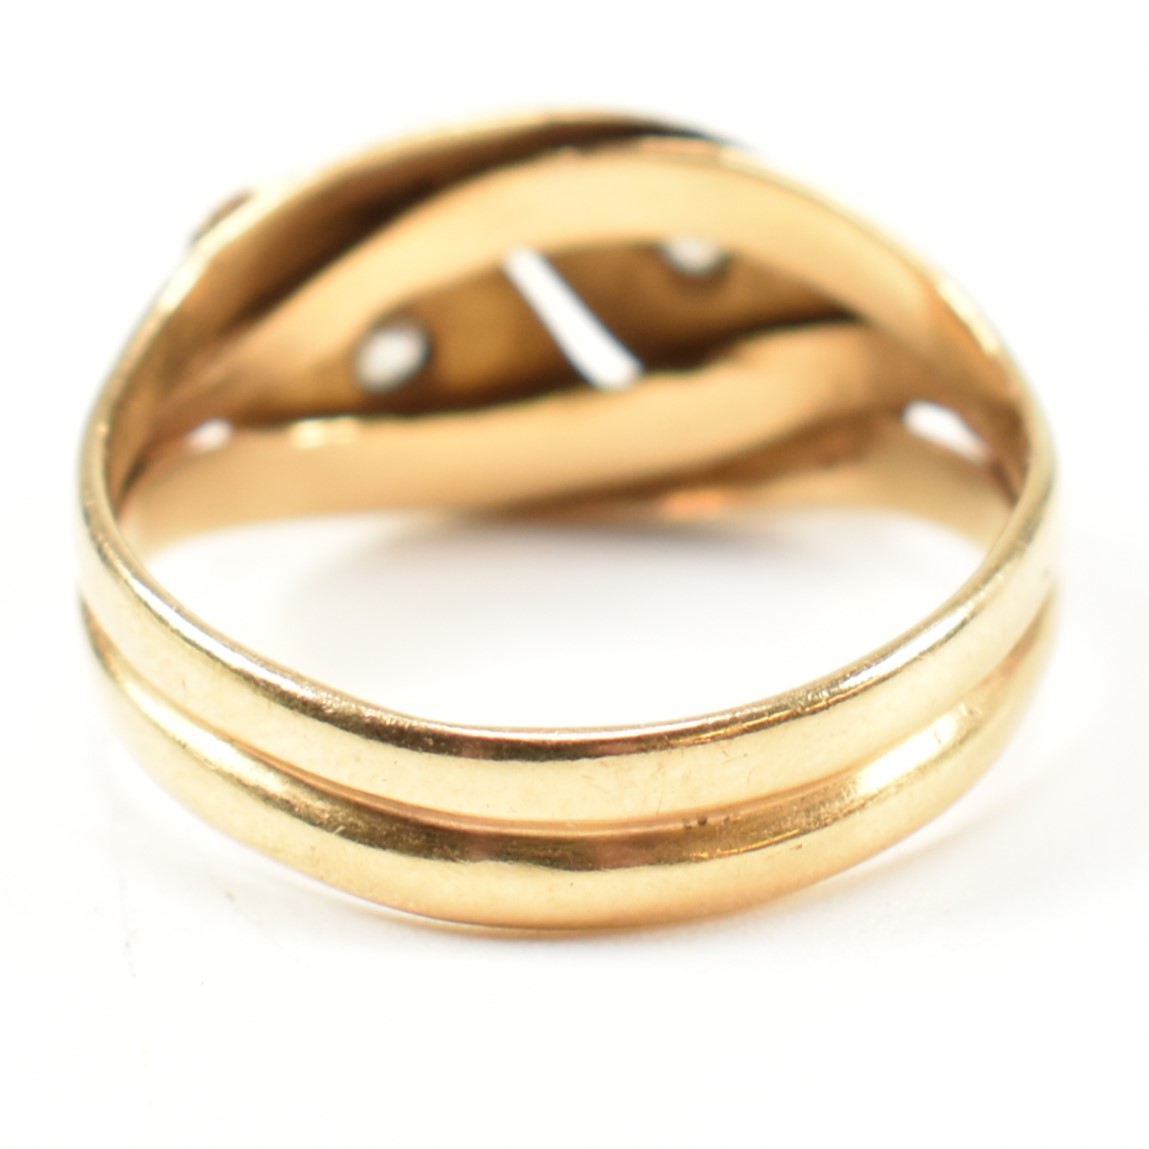 EDWARDIAN HALLMARKED 18CT GOLD & DIAMOND TWIN SNAKE RING - Image 2 of 8